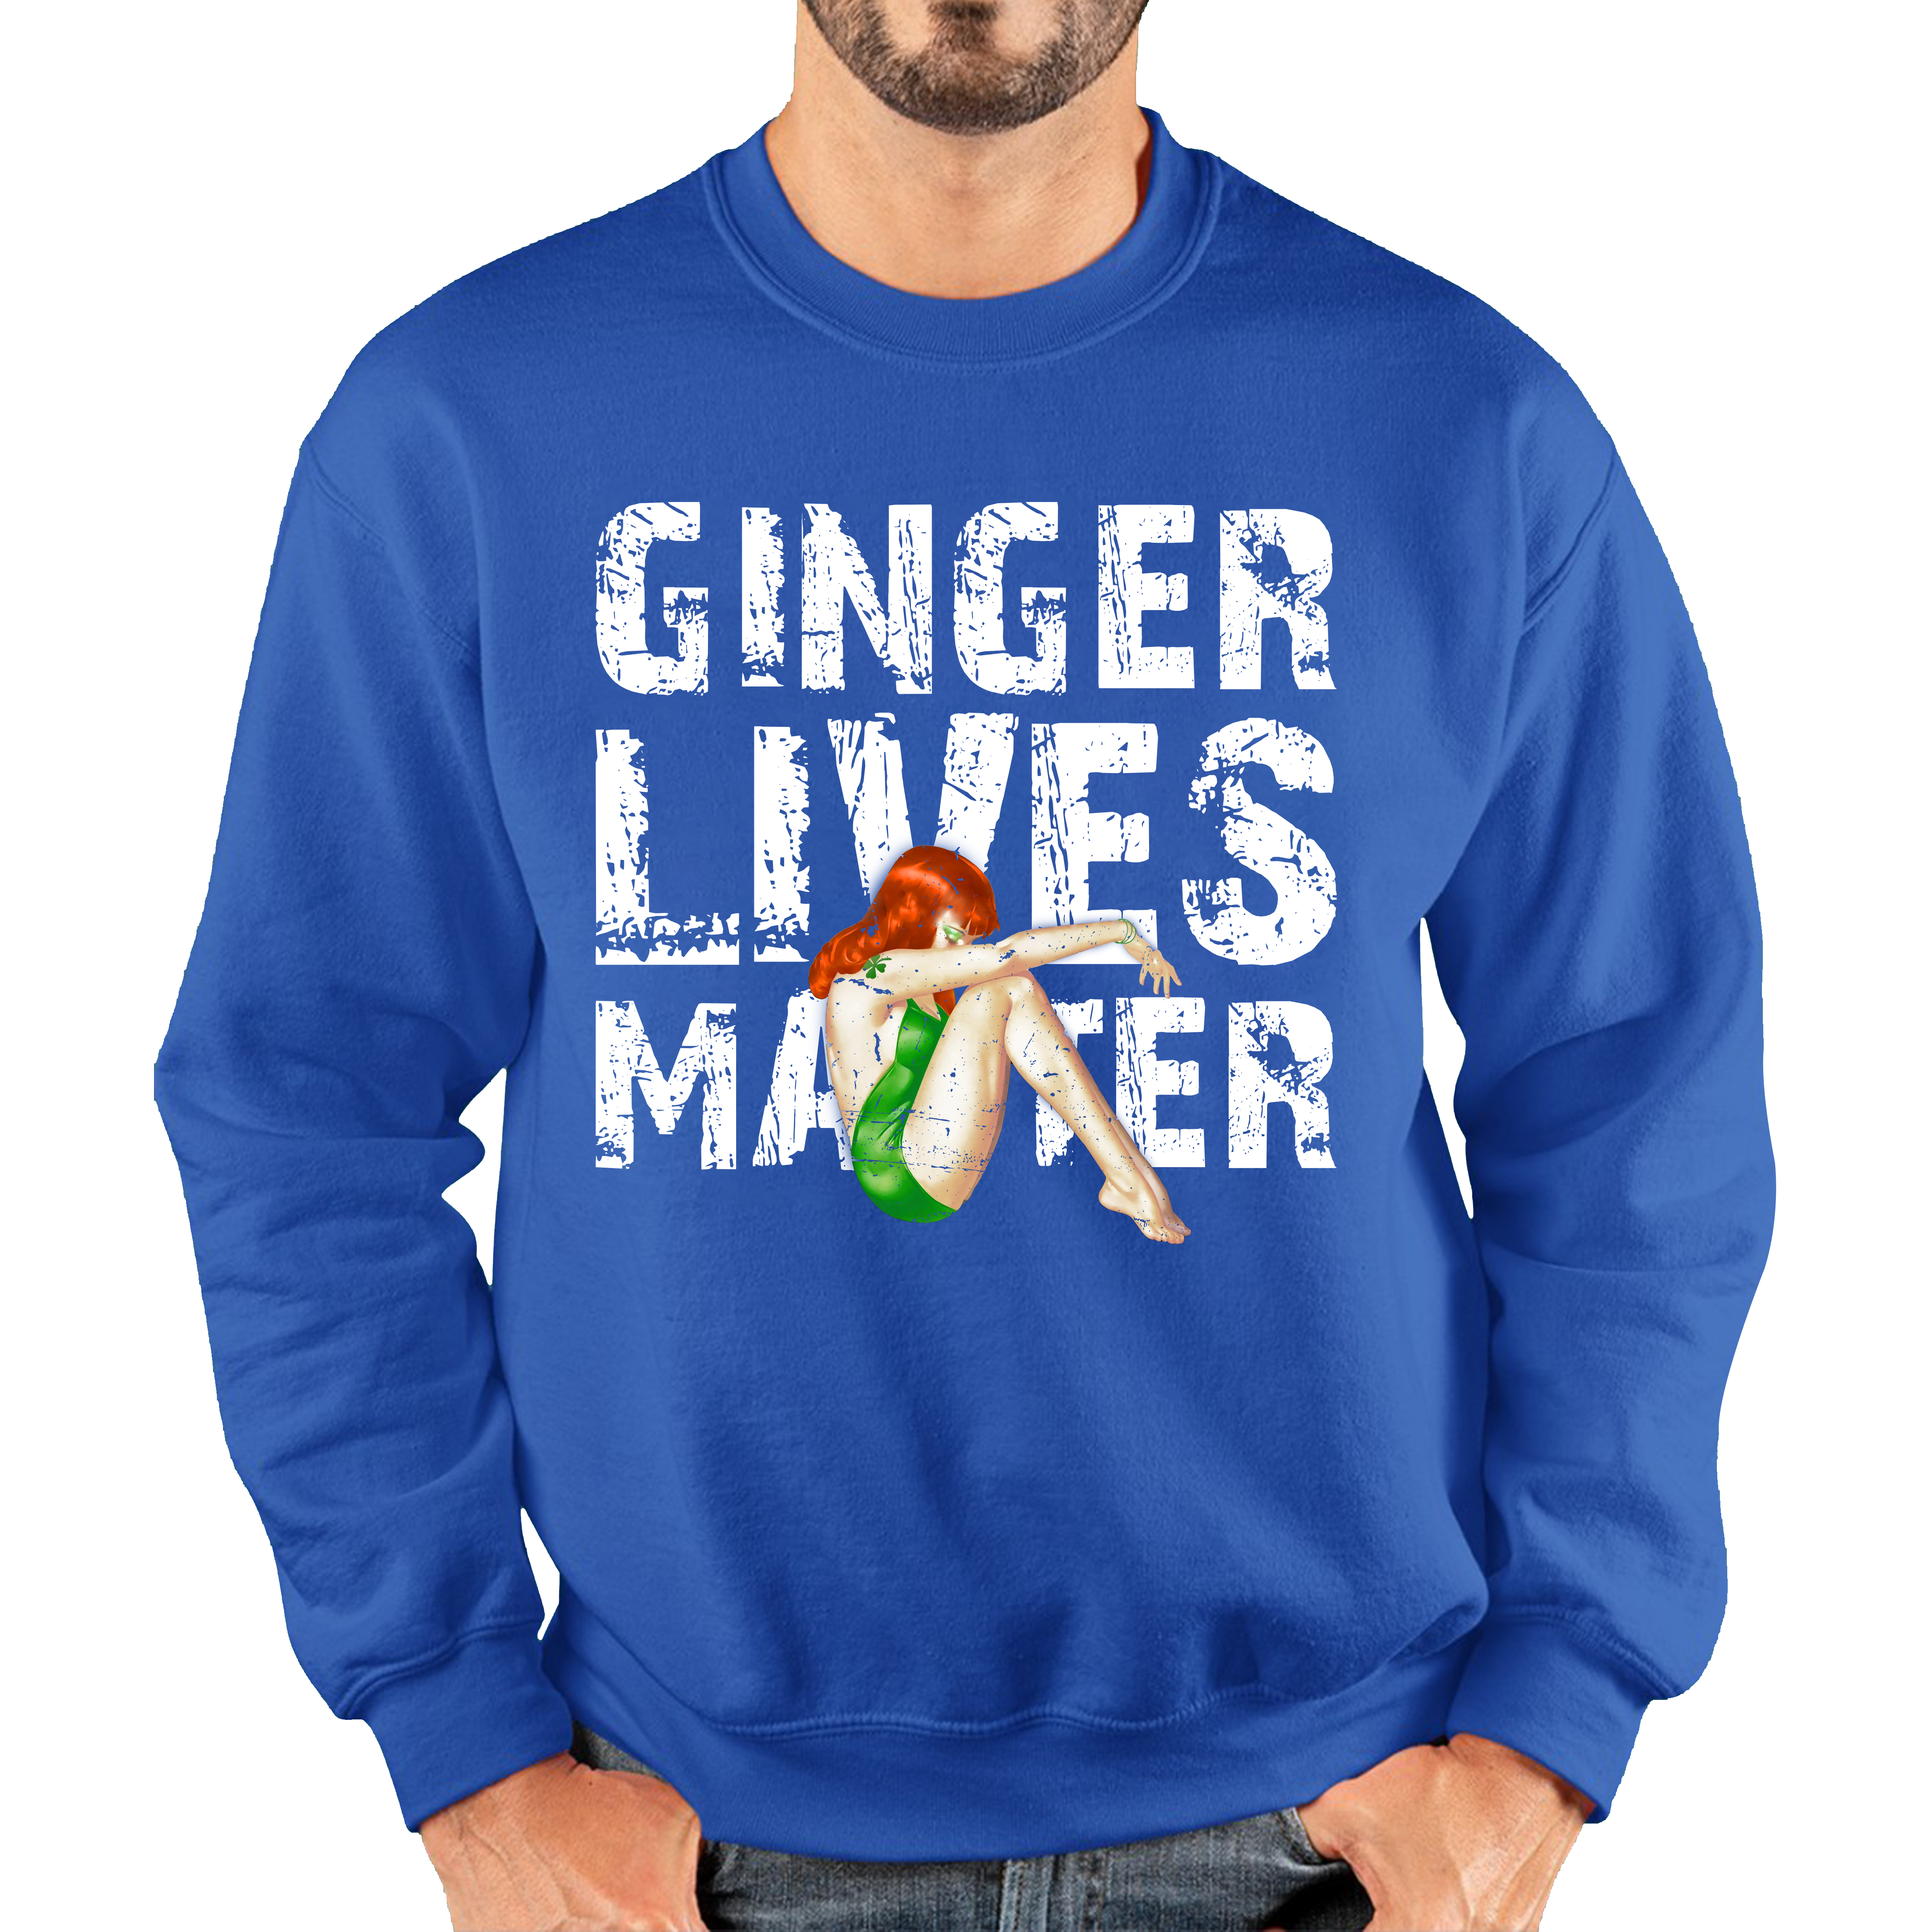 Weed Girl Gingers Lives Matter Jumper Cannabis Marijuana Lovers Funny All Lives matter Spoof Unisex Sweatshirt